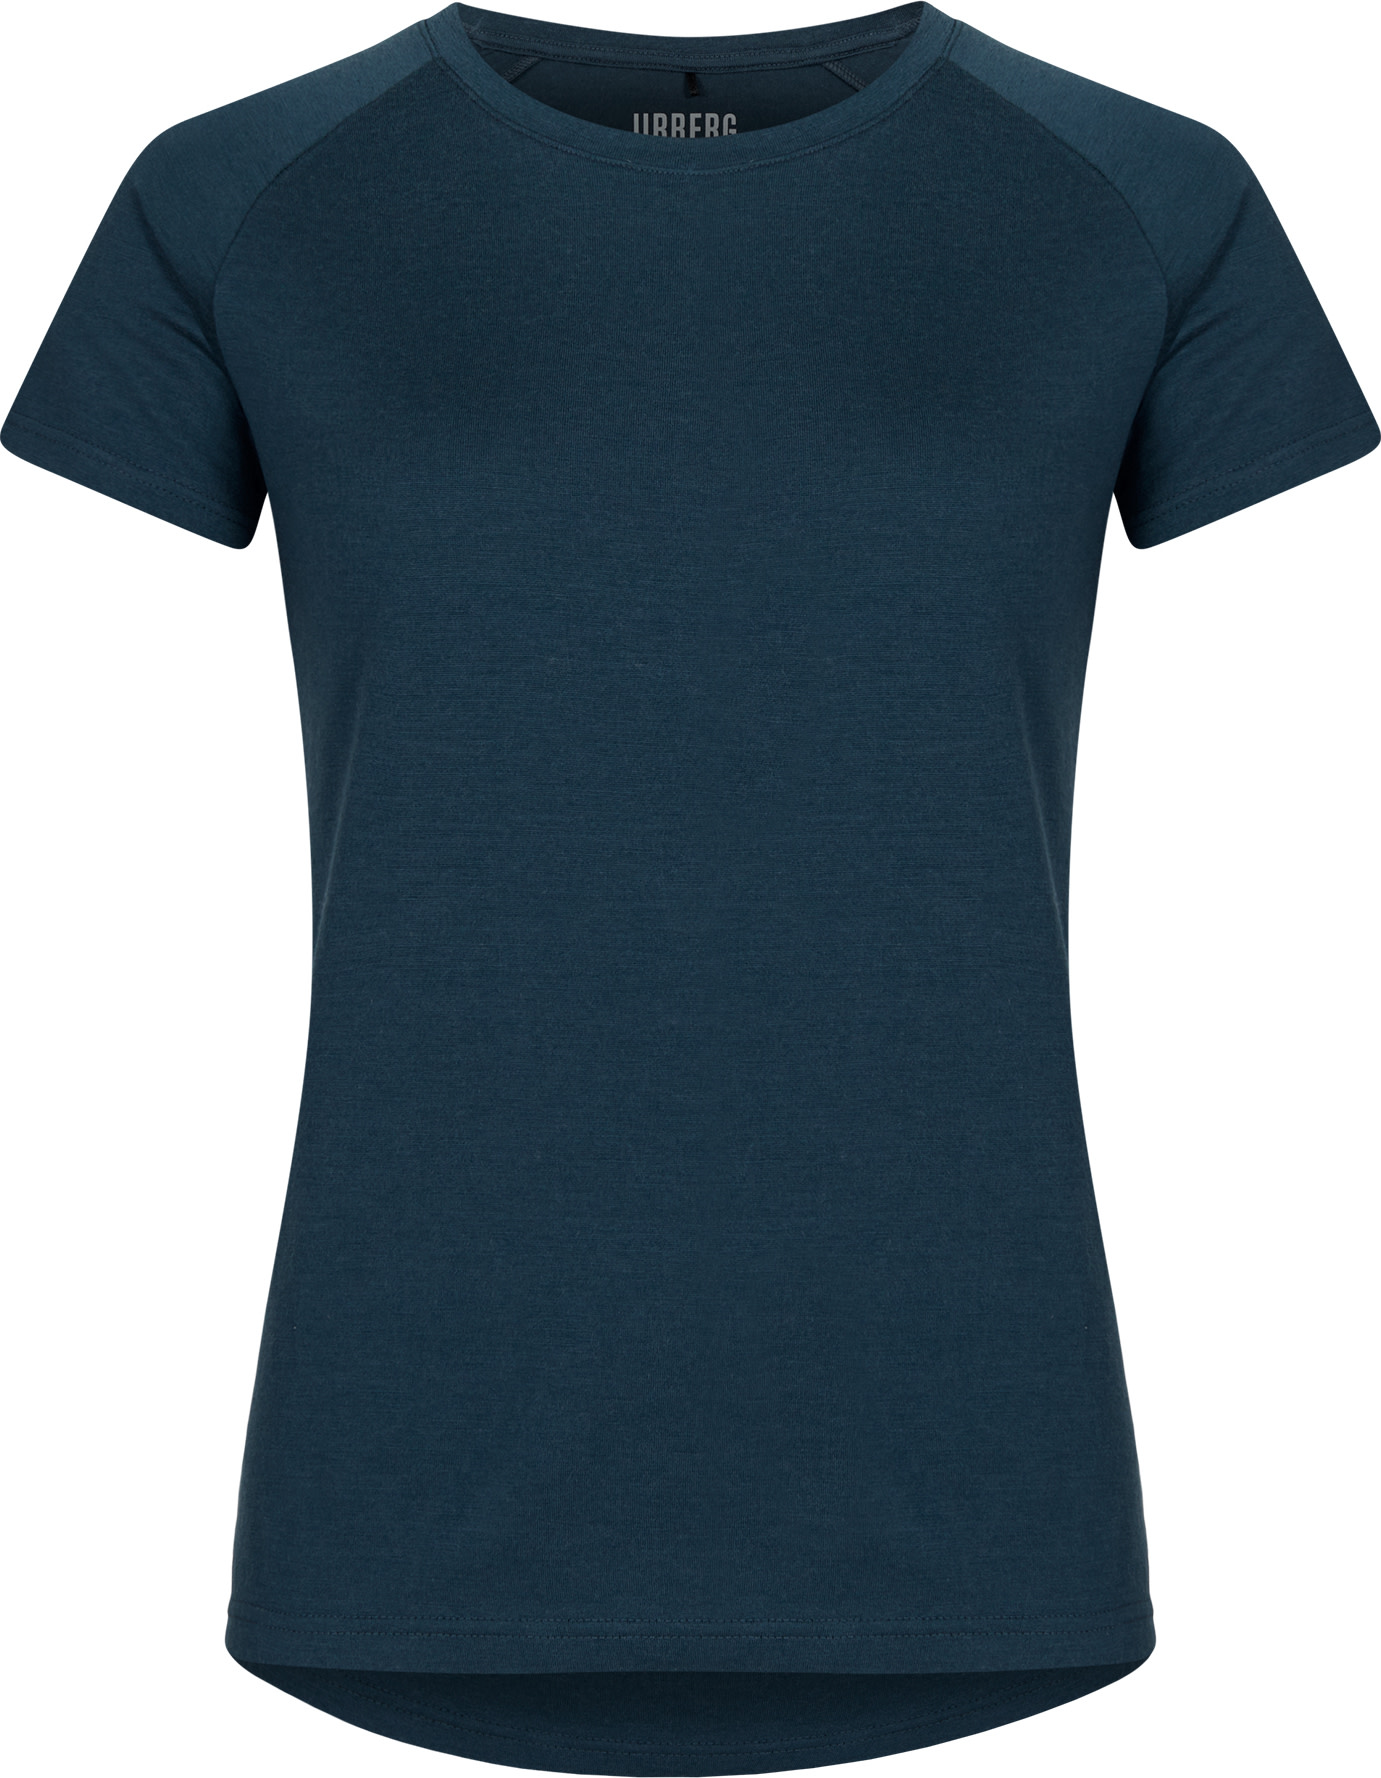 Urberg Women’s Lyngen Merino T-Shirt 2.0 Midnight Navy